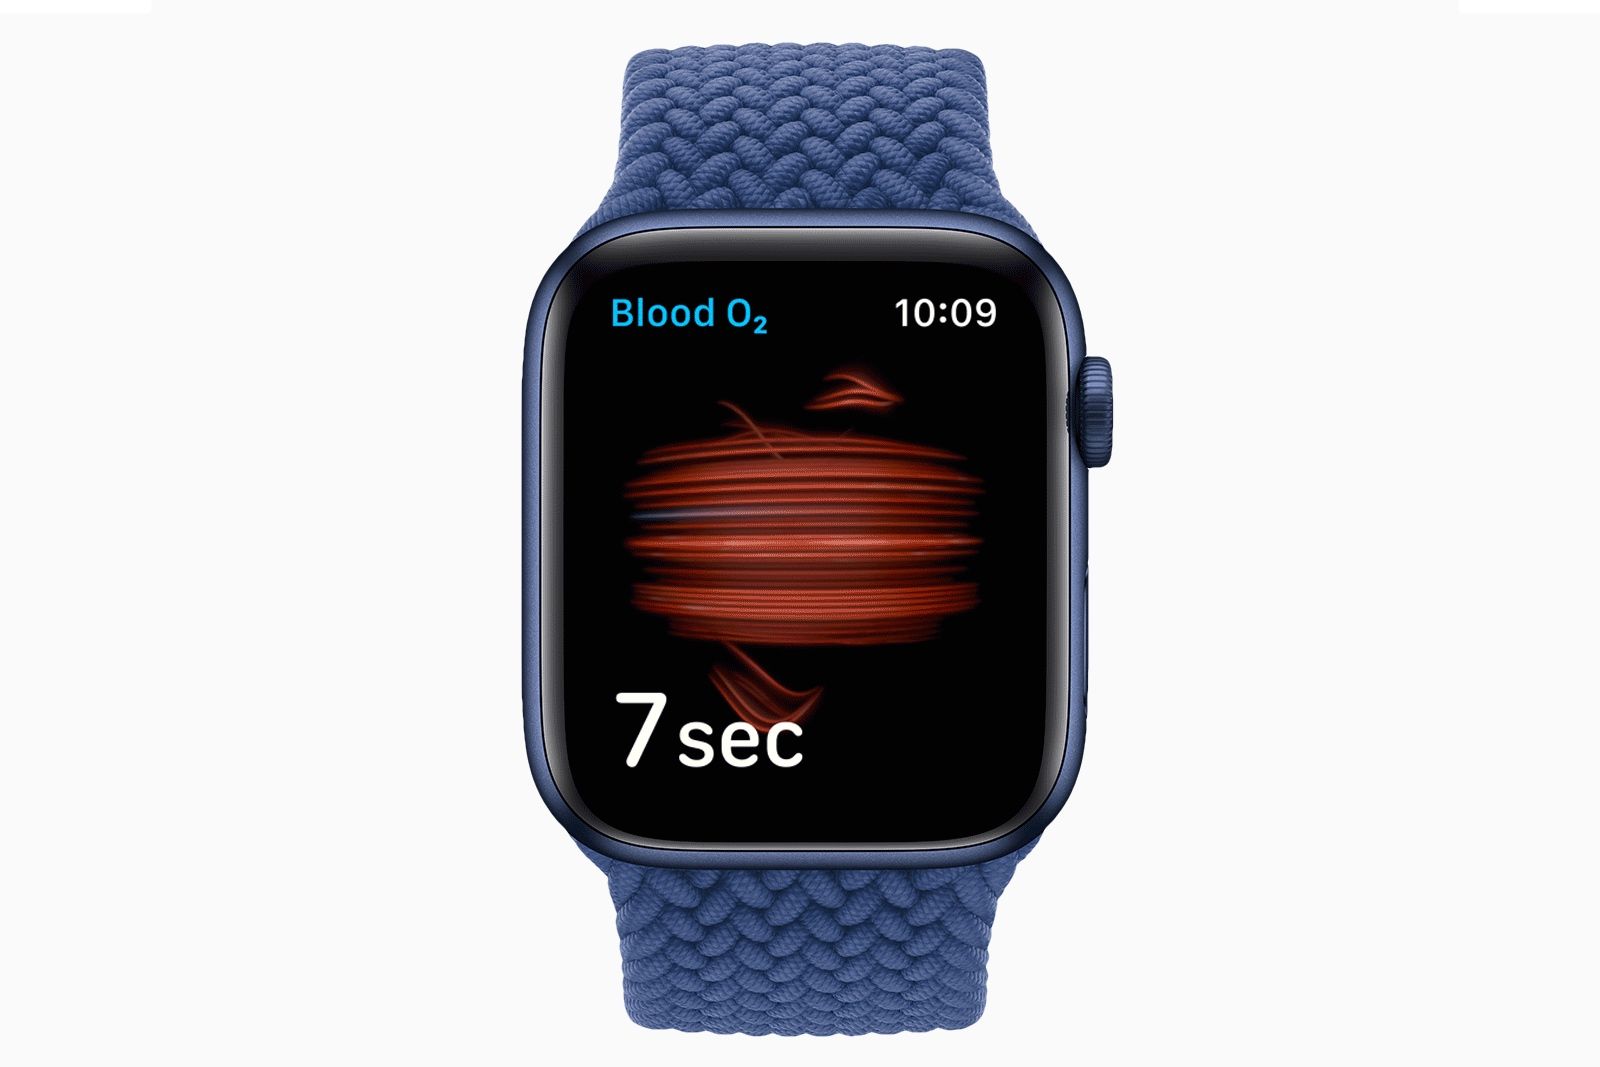 Apple Watch blood oxygen photo 2